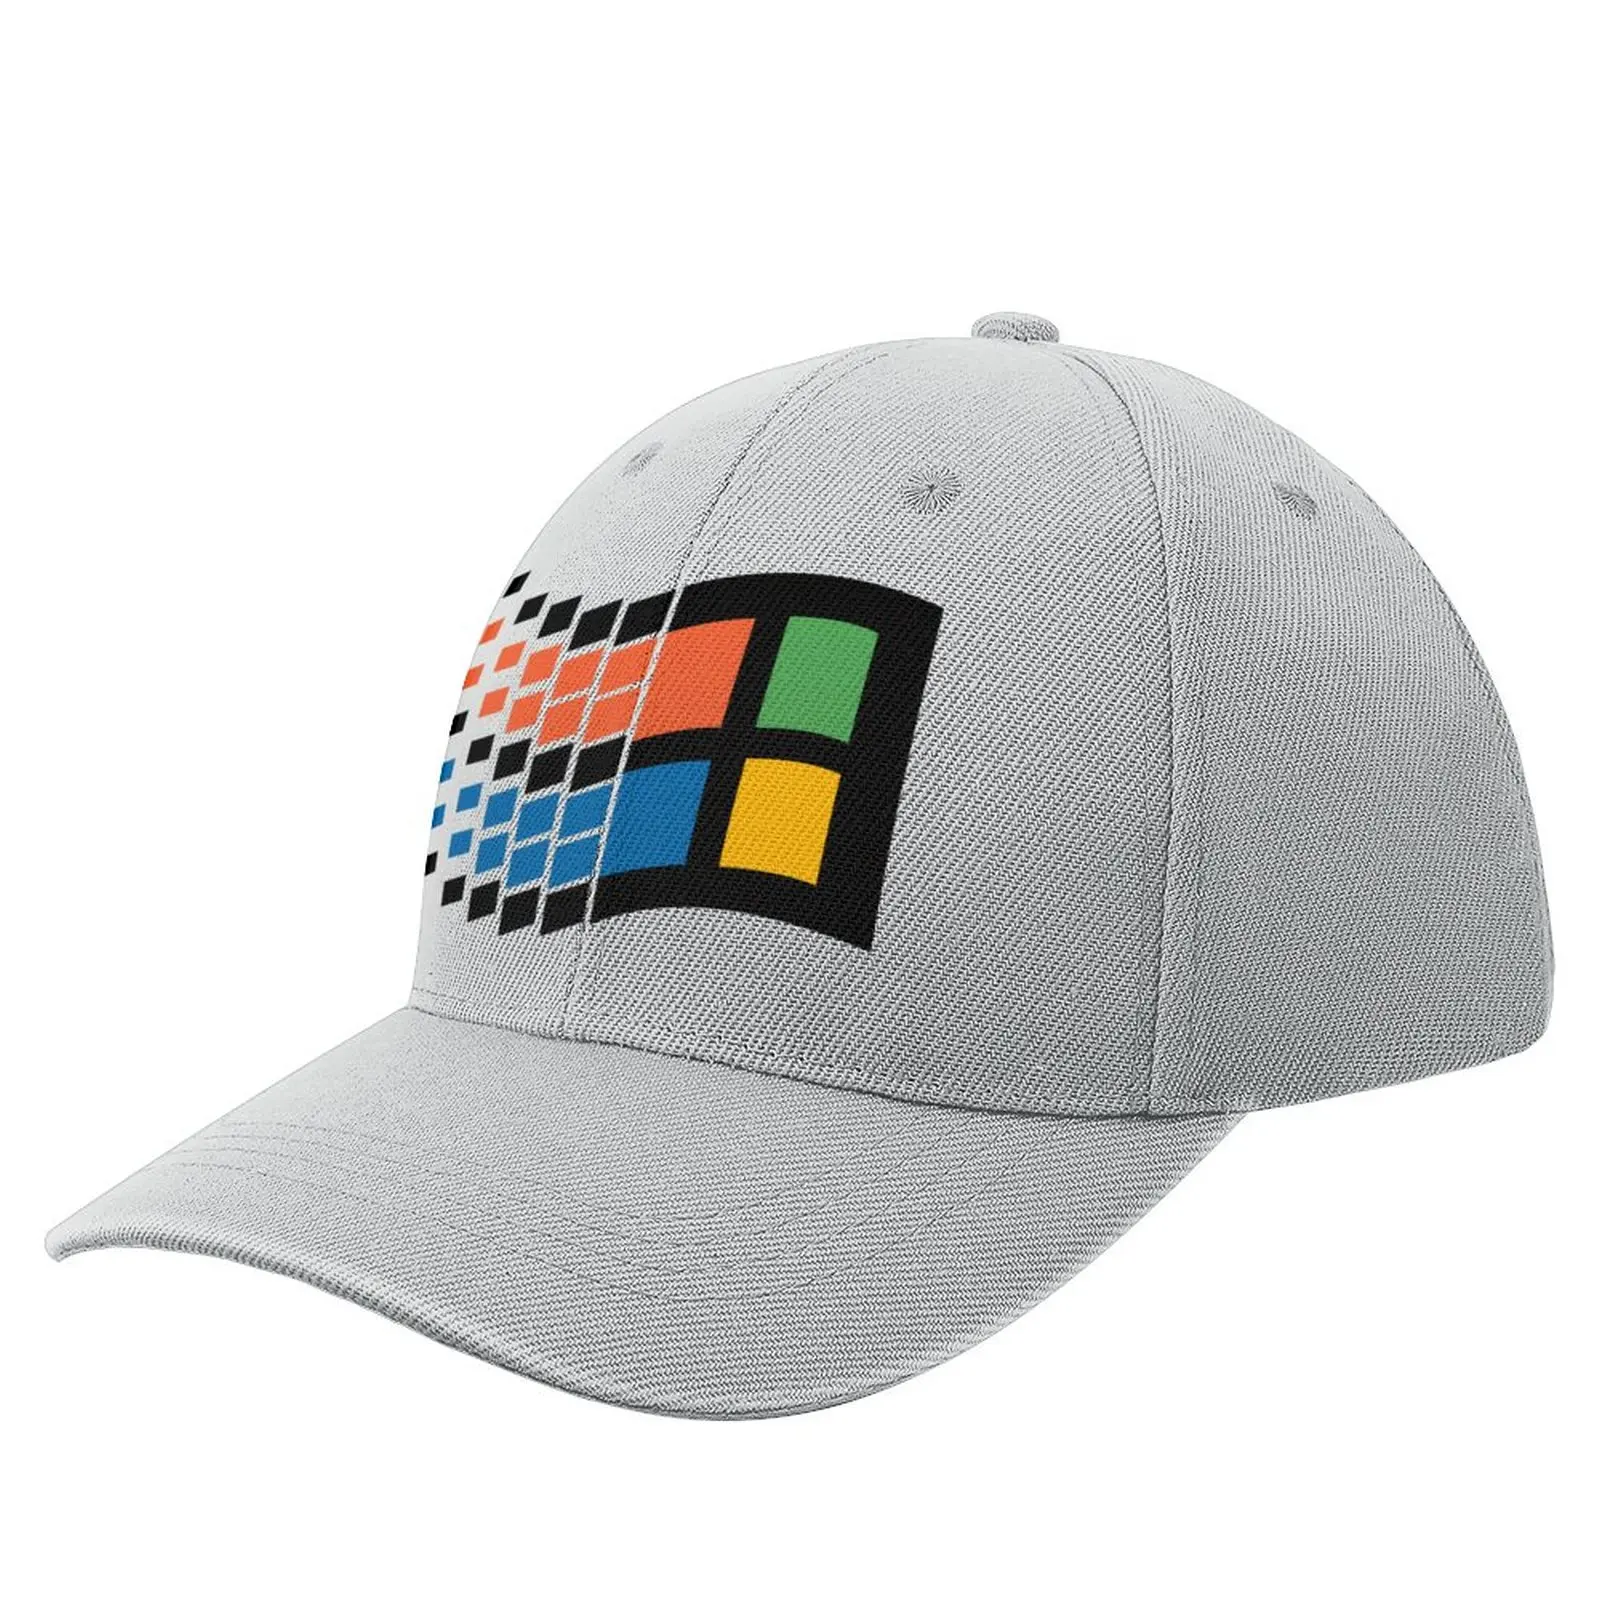 Windows 95 Logo Baseball Cap Hip Hop Military Tactical Caps Hat For Man Women'S